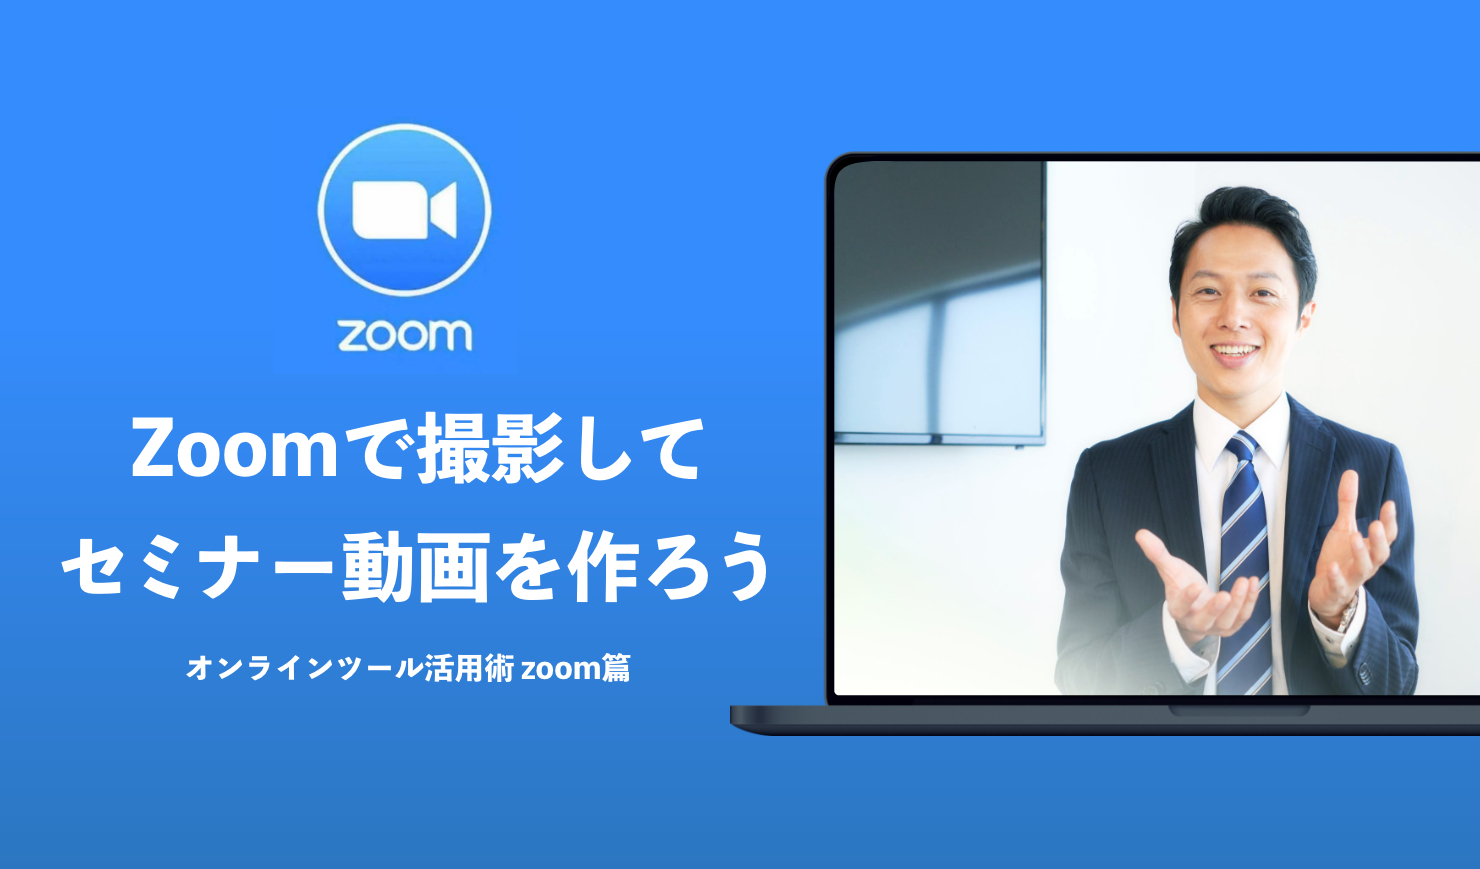 Zoomの録画機能でセミナーを撮影して動画を制作する方法 株式会社ジムの公式サイト